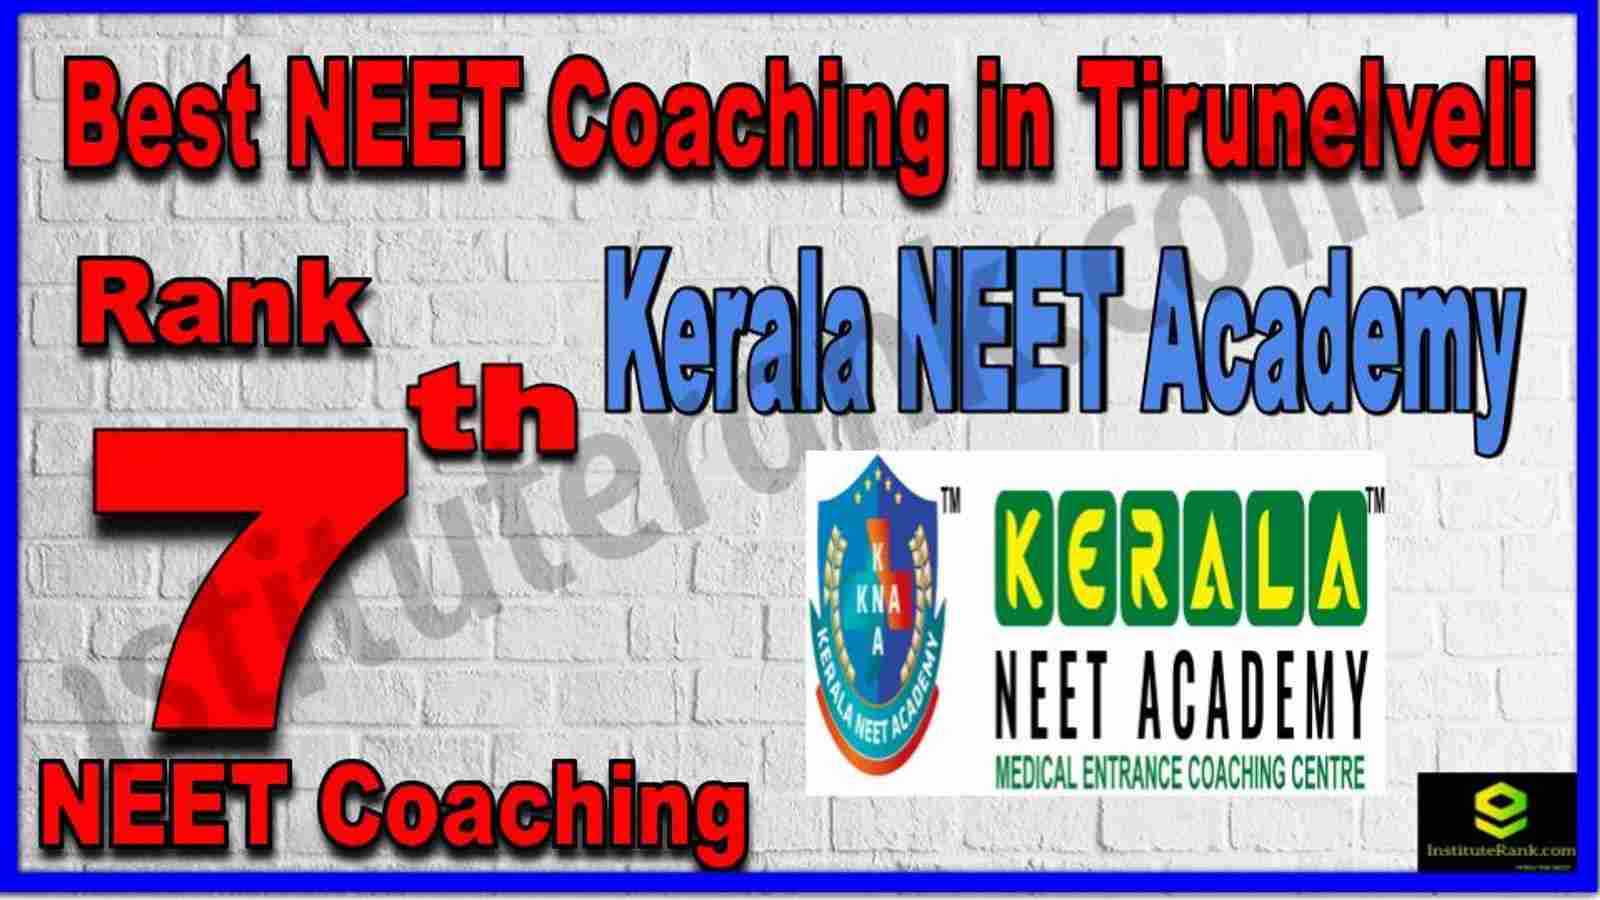 Rank 7th Best NEET Coaching in Tirunelveli